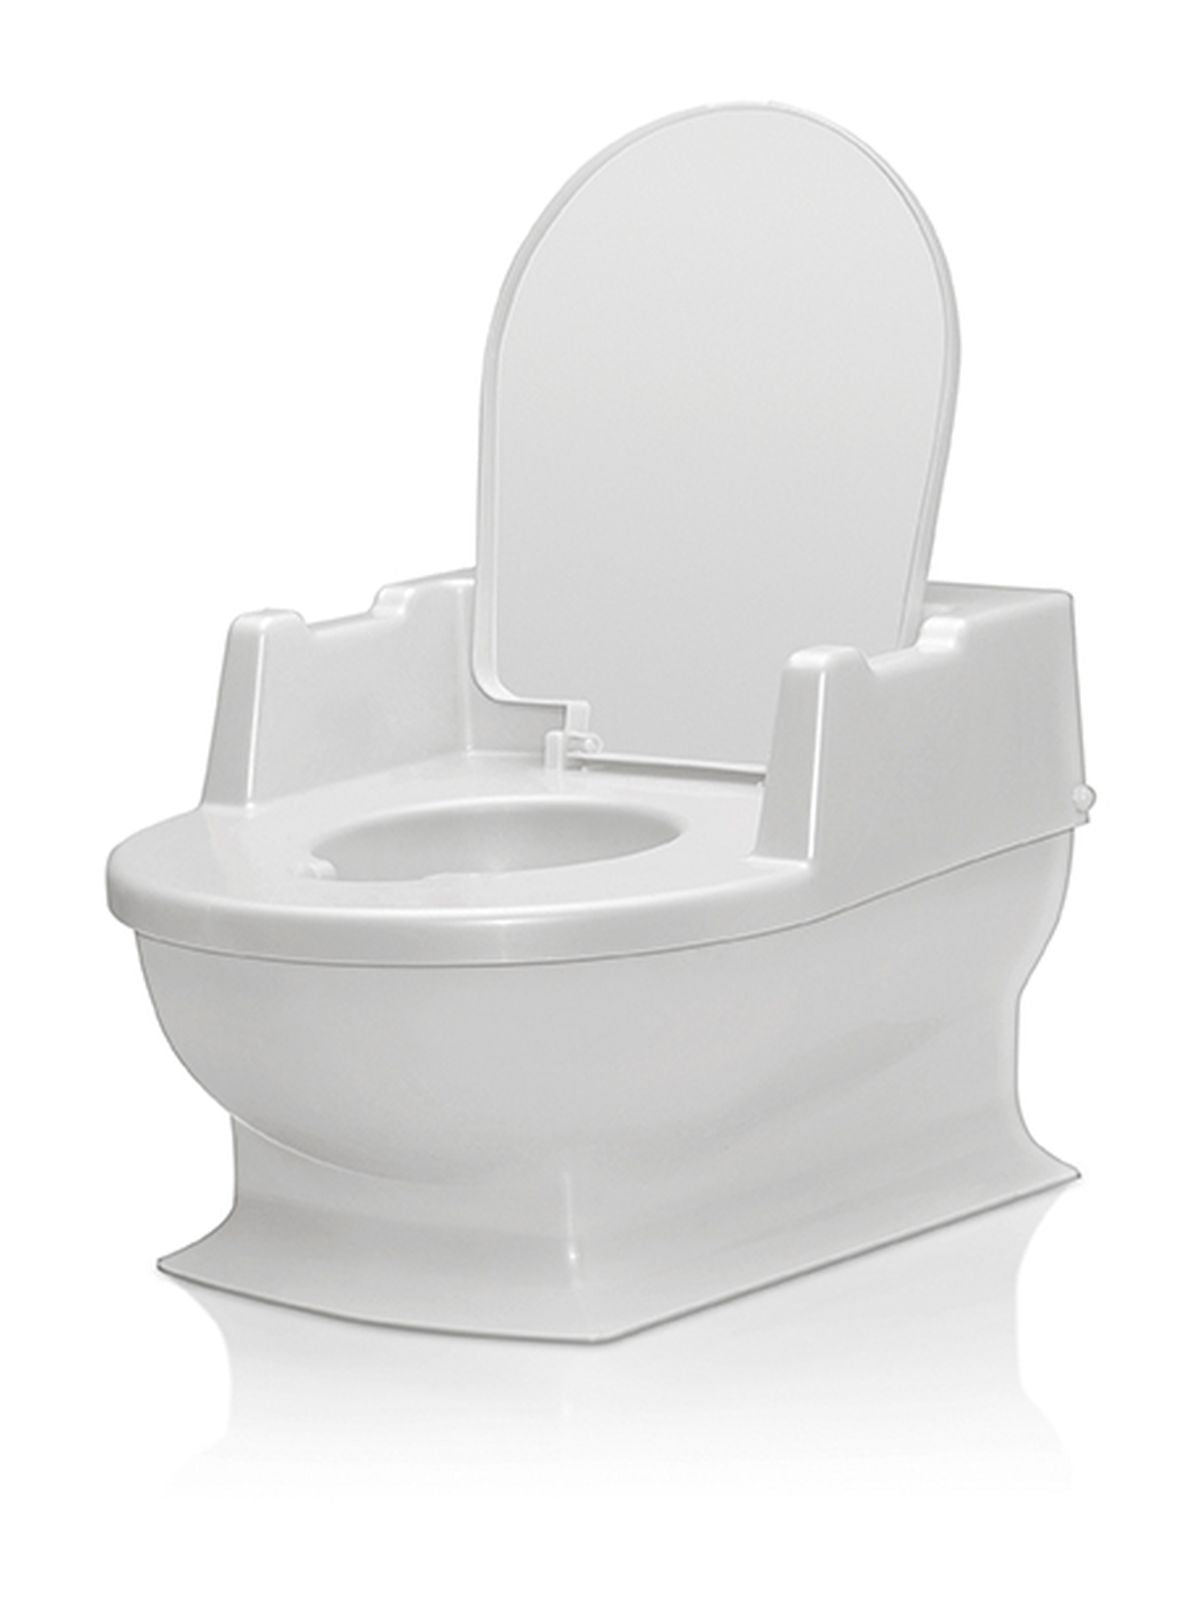 Reer Sitzfritz - The mini-toilet for growing up (White)